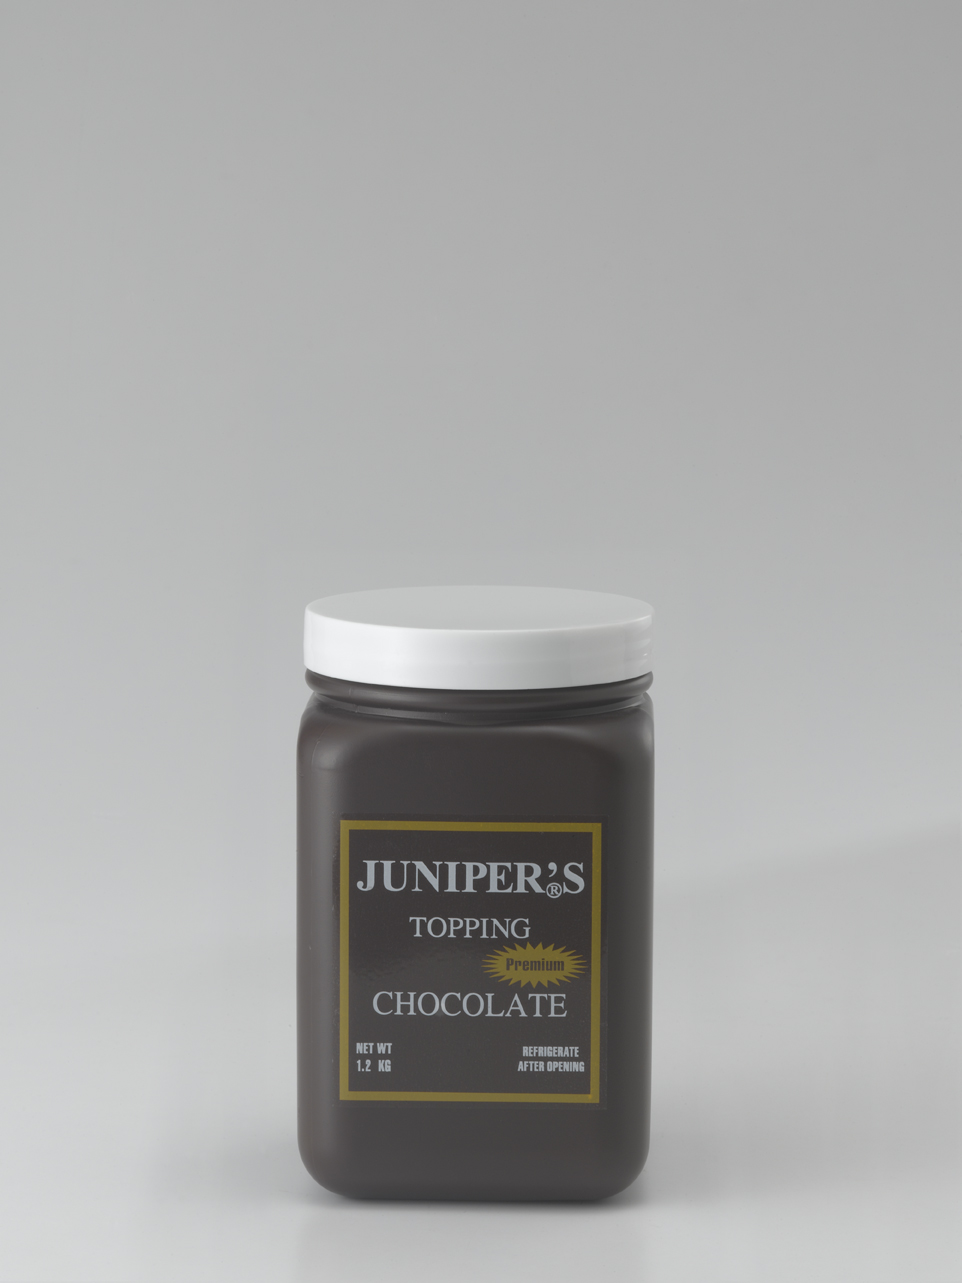 Juniper Chocolate Topping 1.2 KG. (จูนิเปอร์ ช็อกโกแลต ท็อปปิ้ง 1.2 กิโลกรัม)**จำกัดการซื้อ 8 กระปุก / ออร์เดอร์**